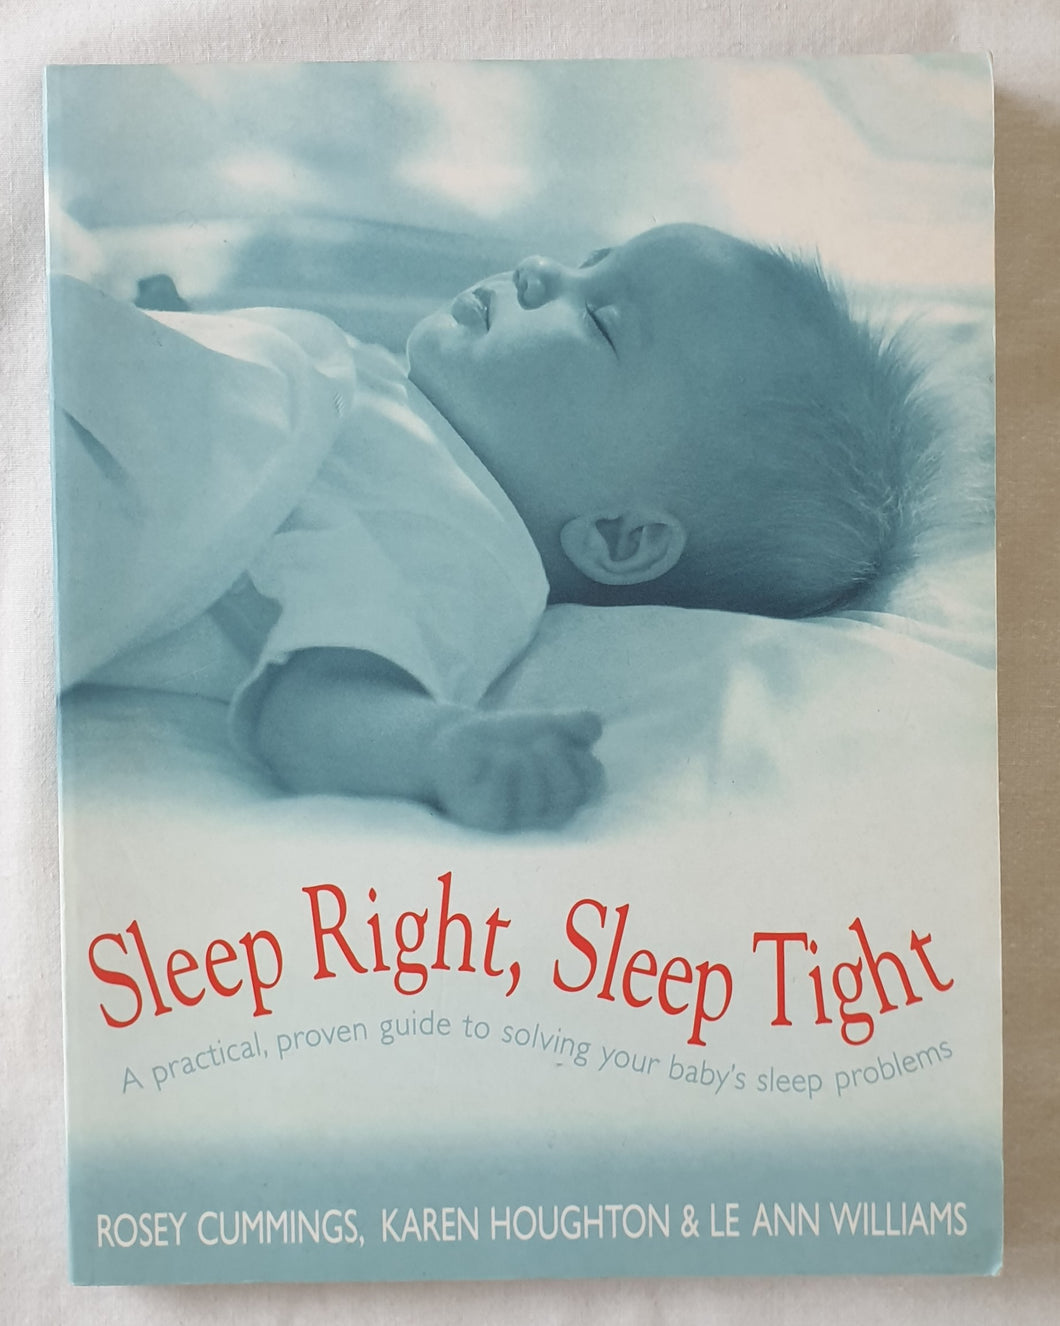 Sleep Right, Sleep Tight by Rosey Cummings, Karen Houghton and Le Ann Williams